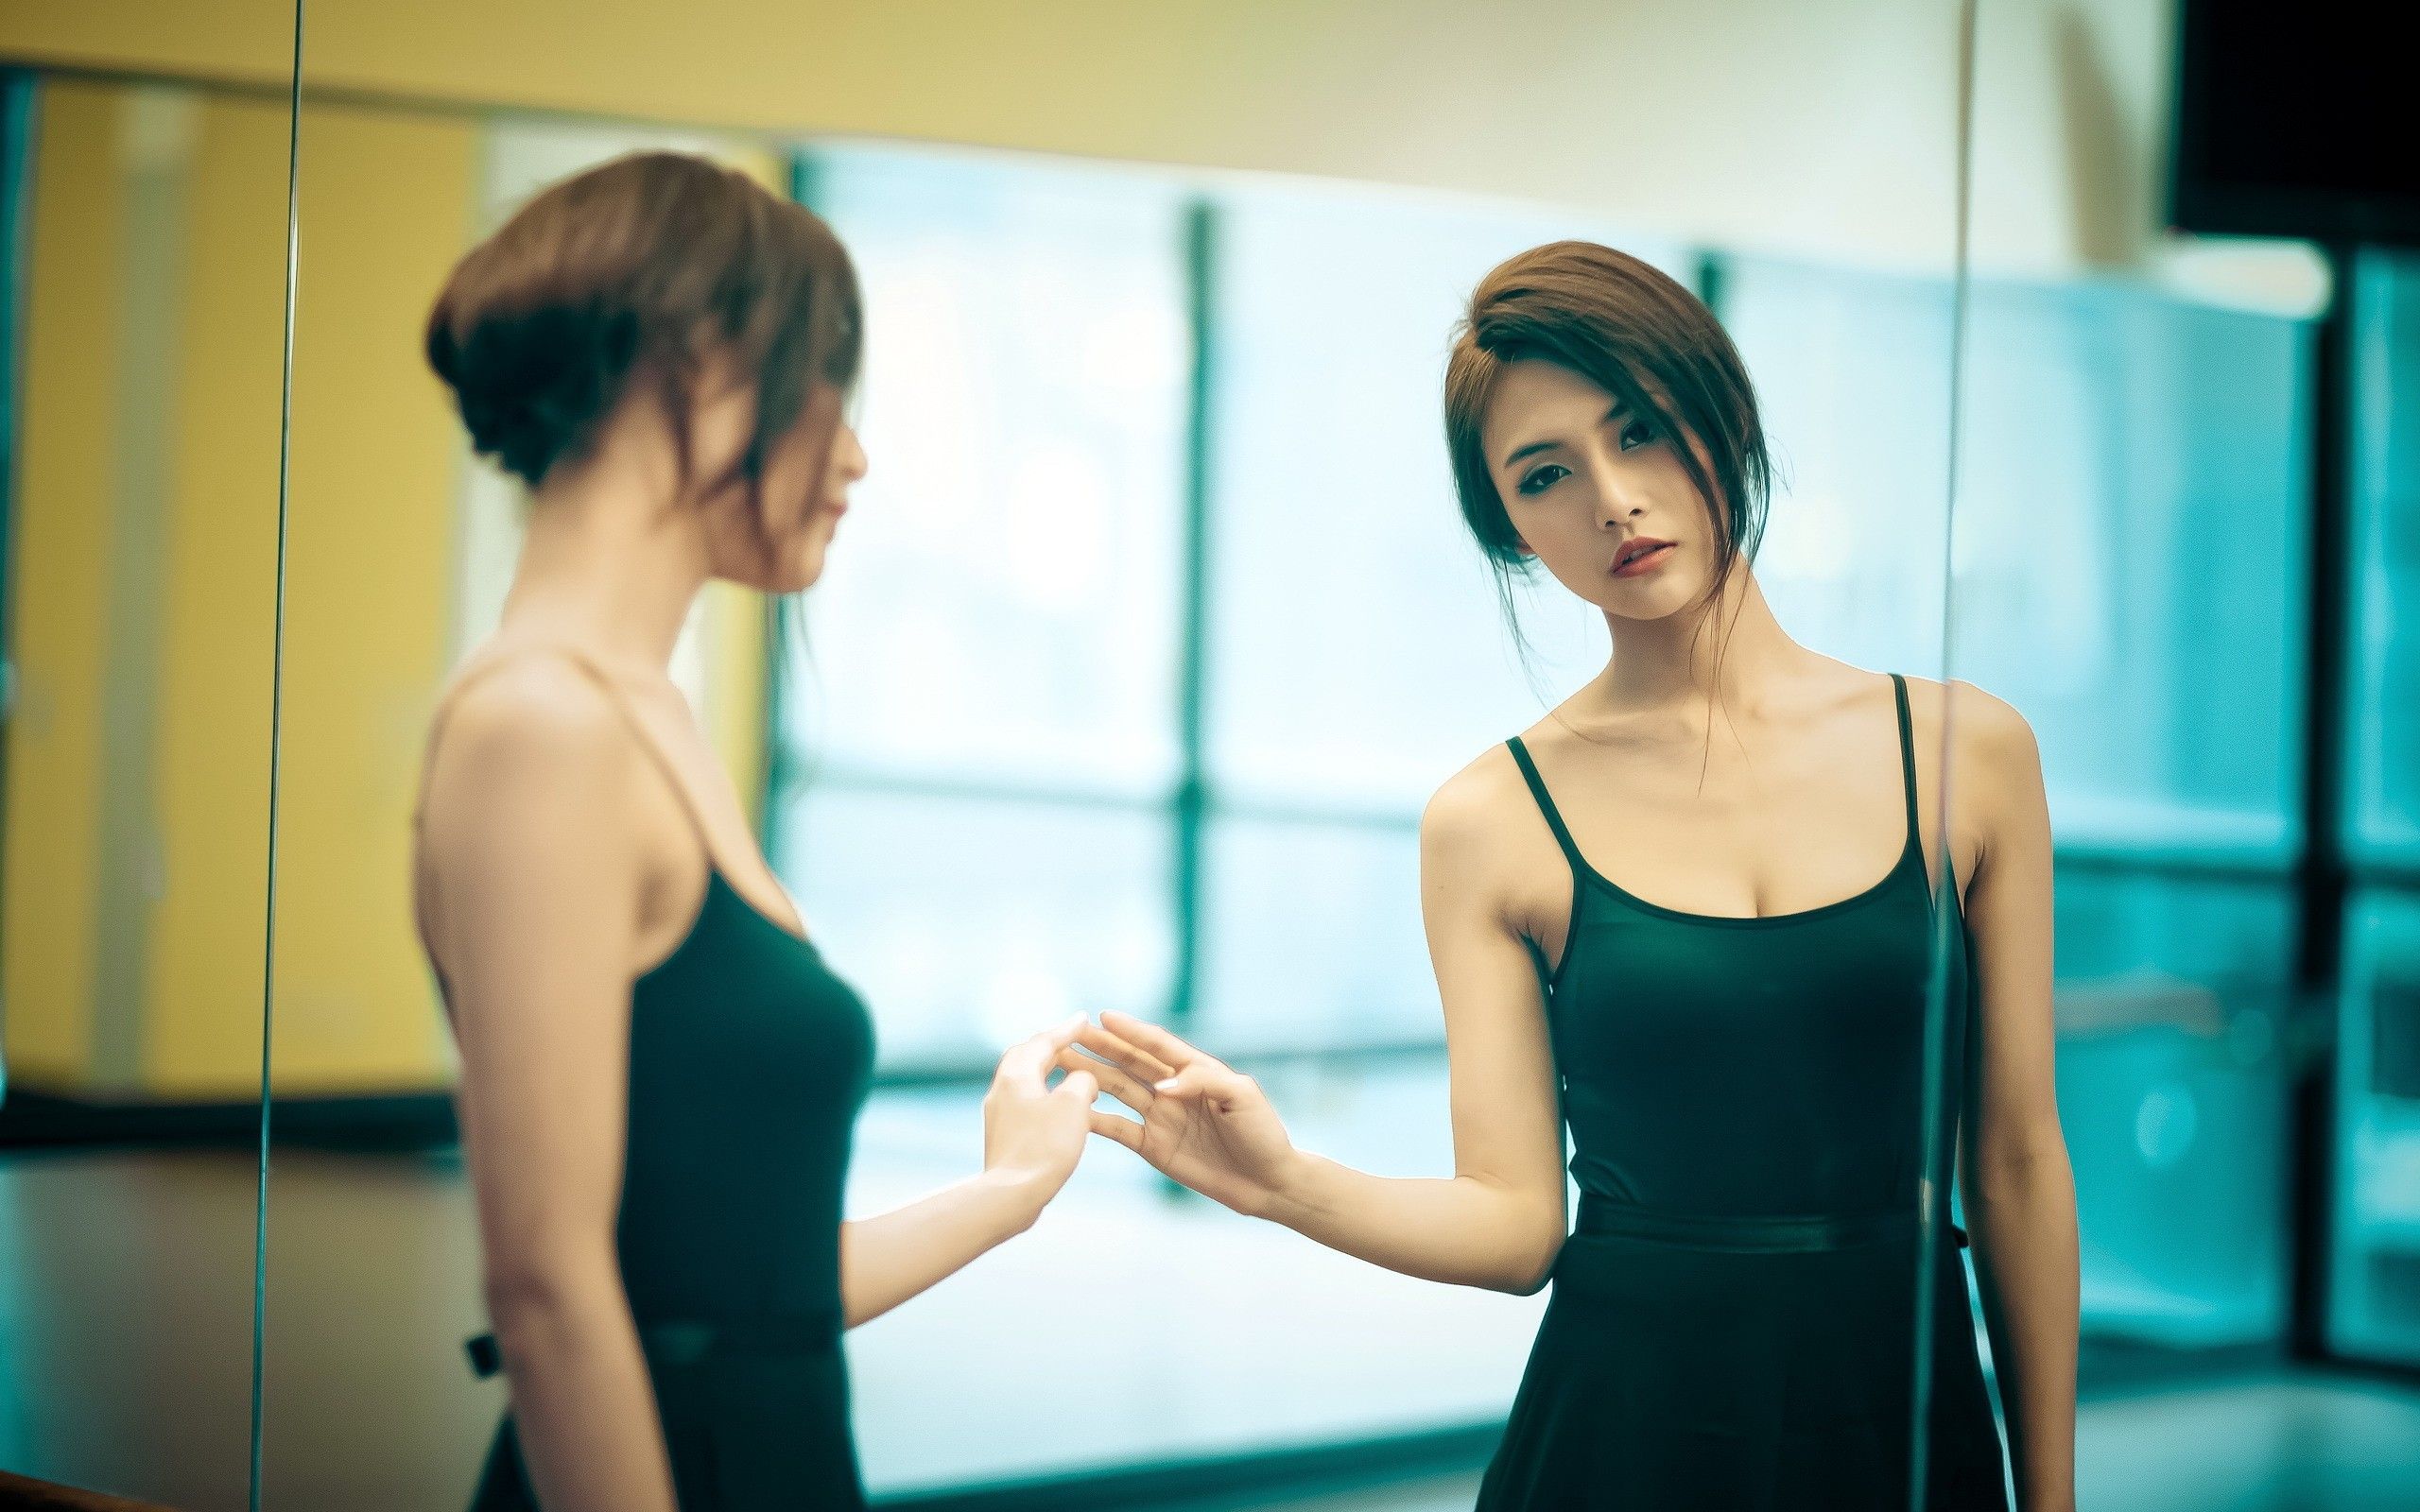 #mirror, #Asian, #reflection, #women, wallpaper. People